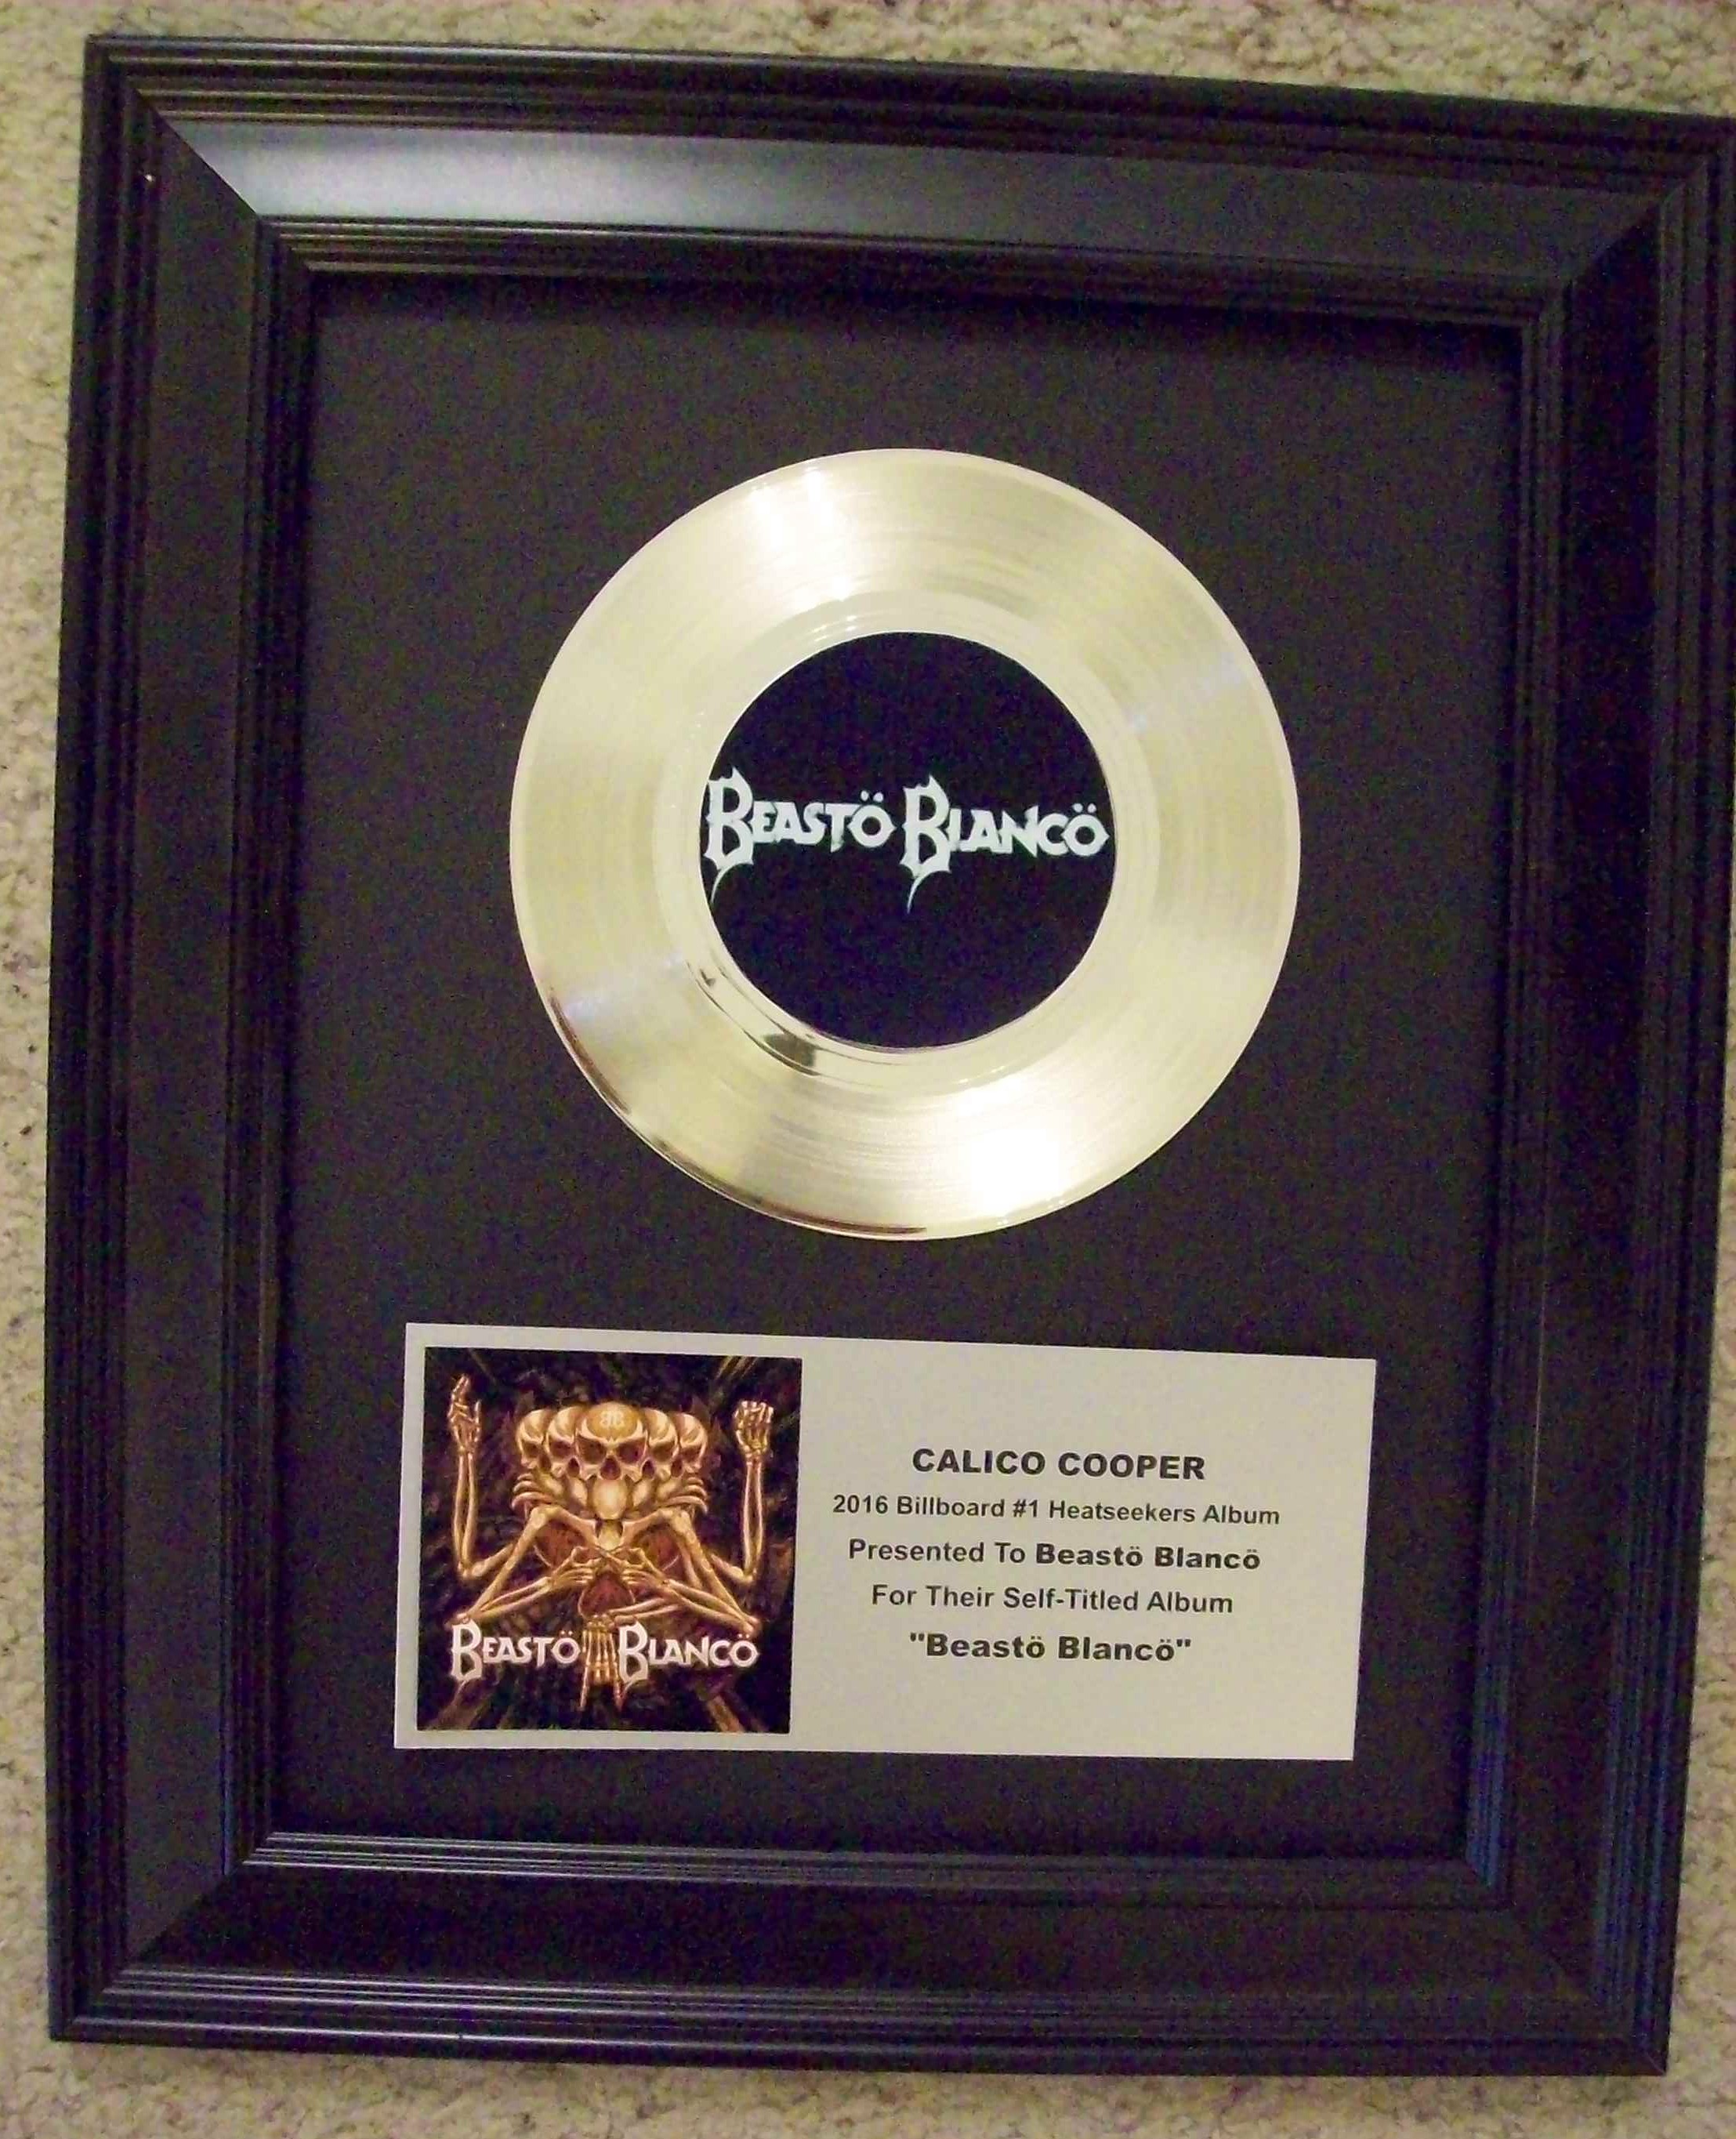 Image for Custom Platinum 45 7" Record Award/Trophy